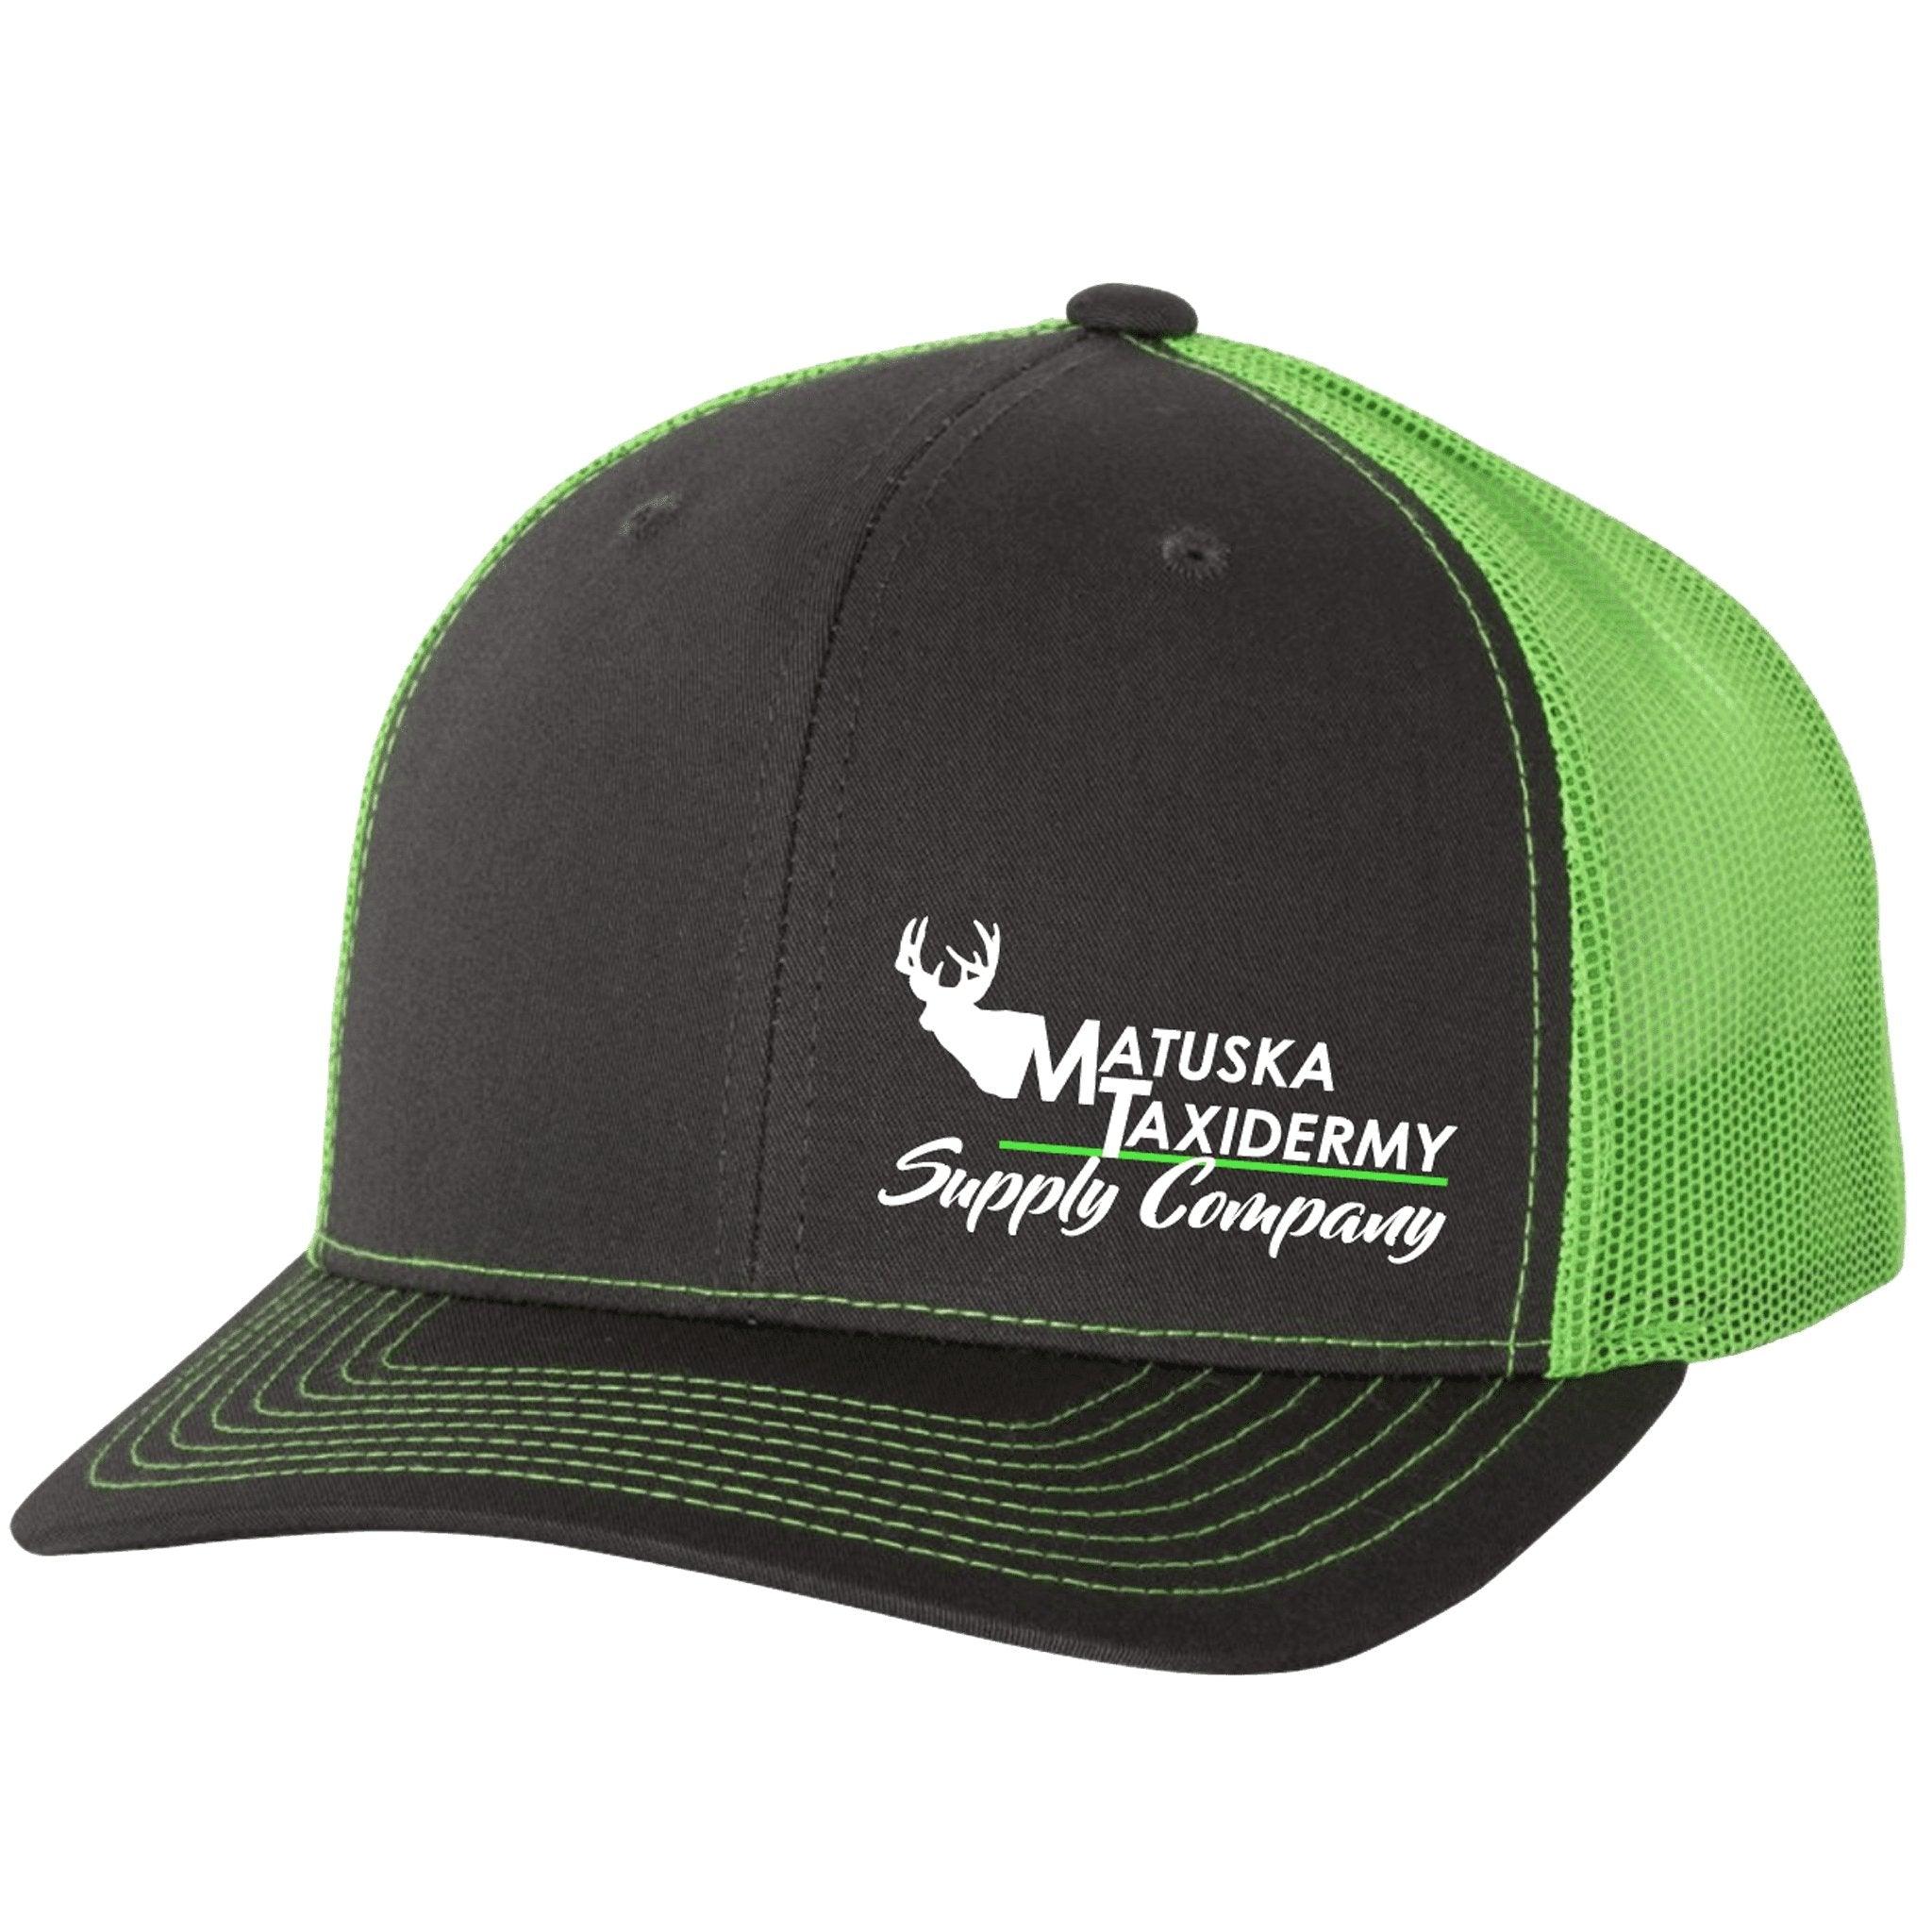 Adjustable Neon Hat - Matuska Taxidermy Supply Company